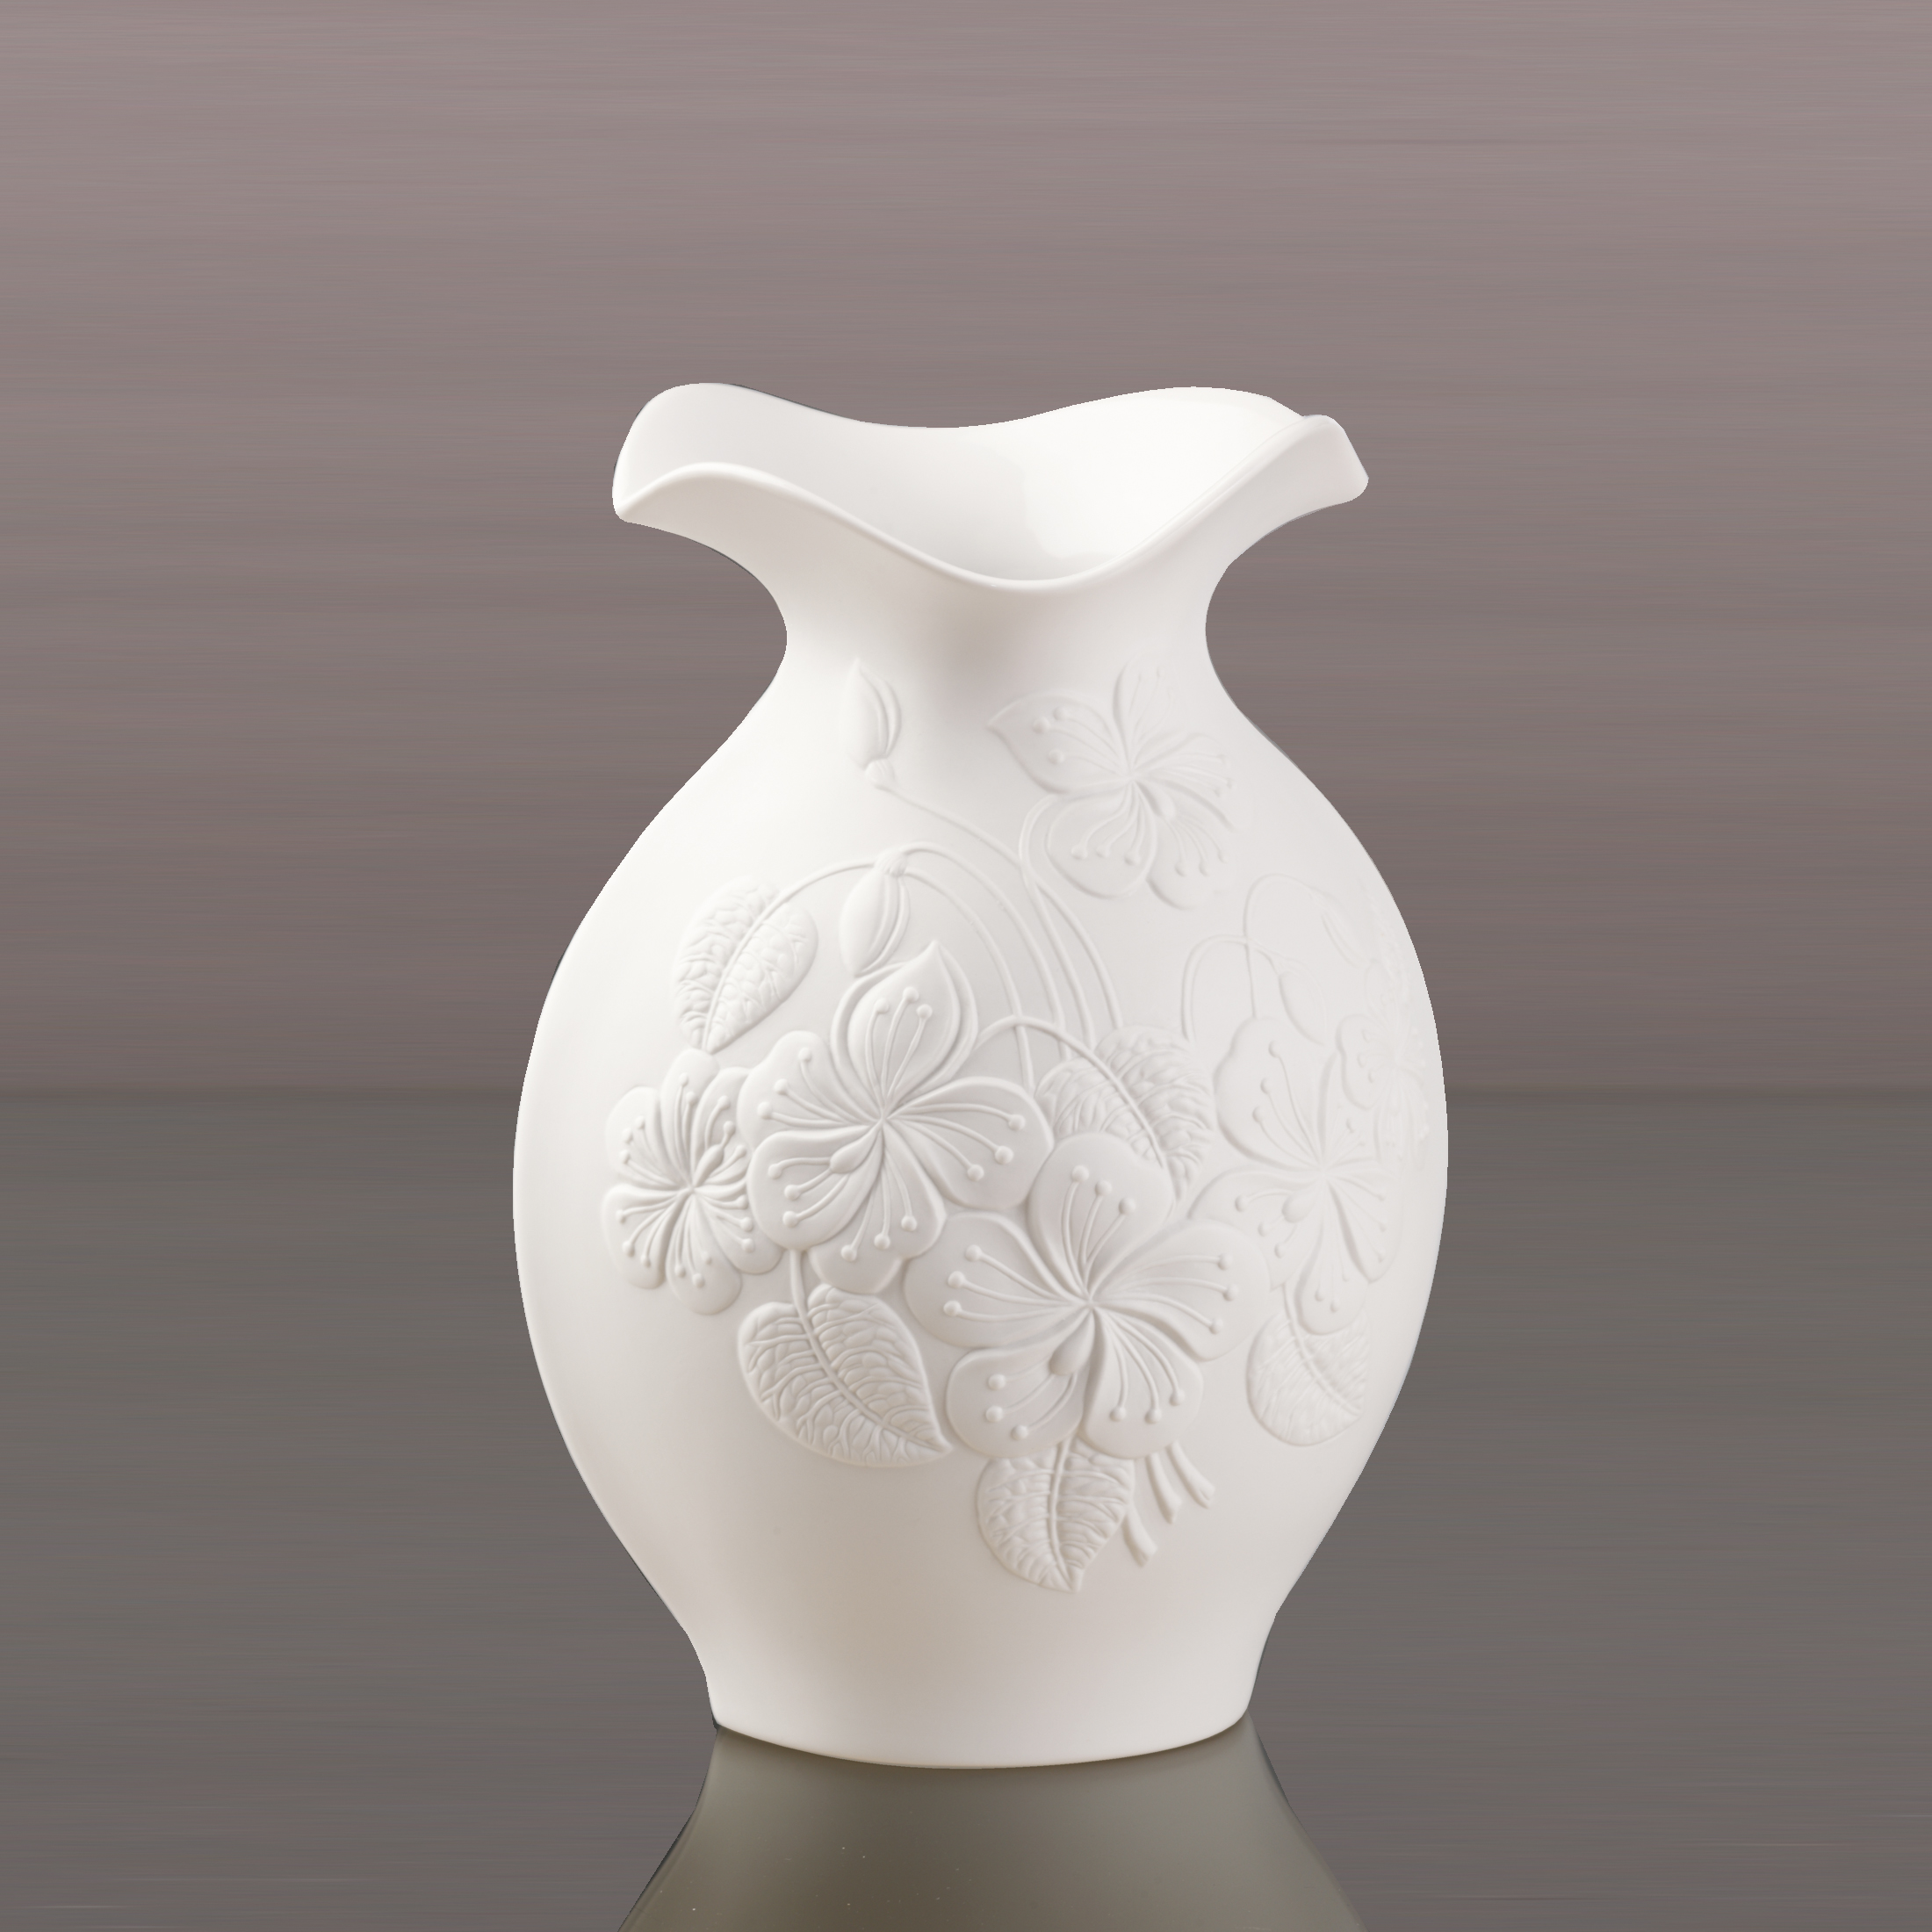 Dekoralia.de - Goebel Vase Floralie Kaiser Porzellan cm 25